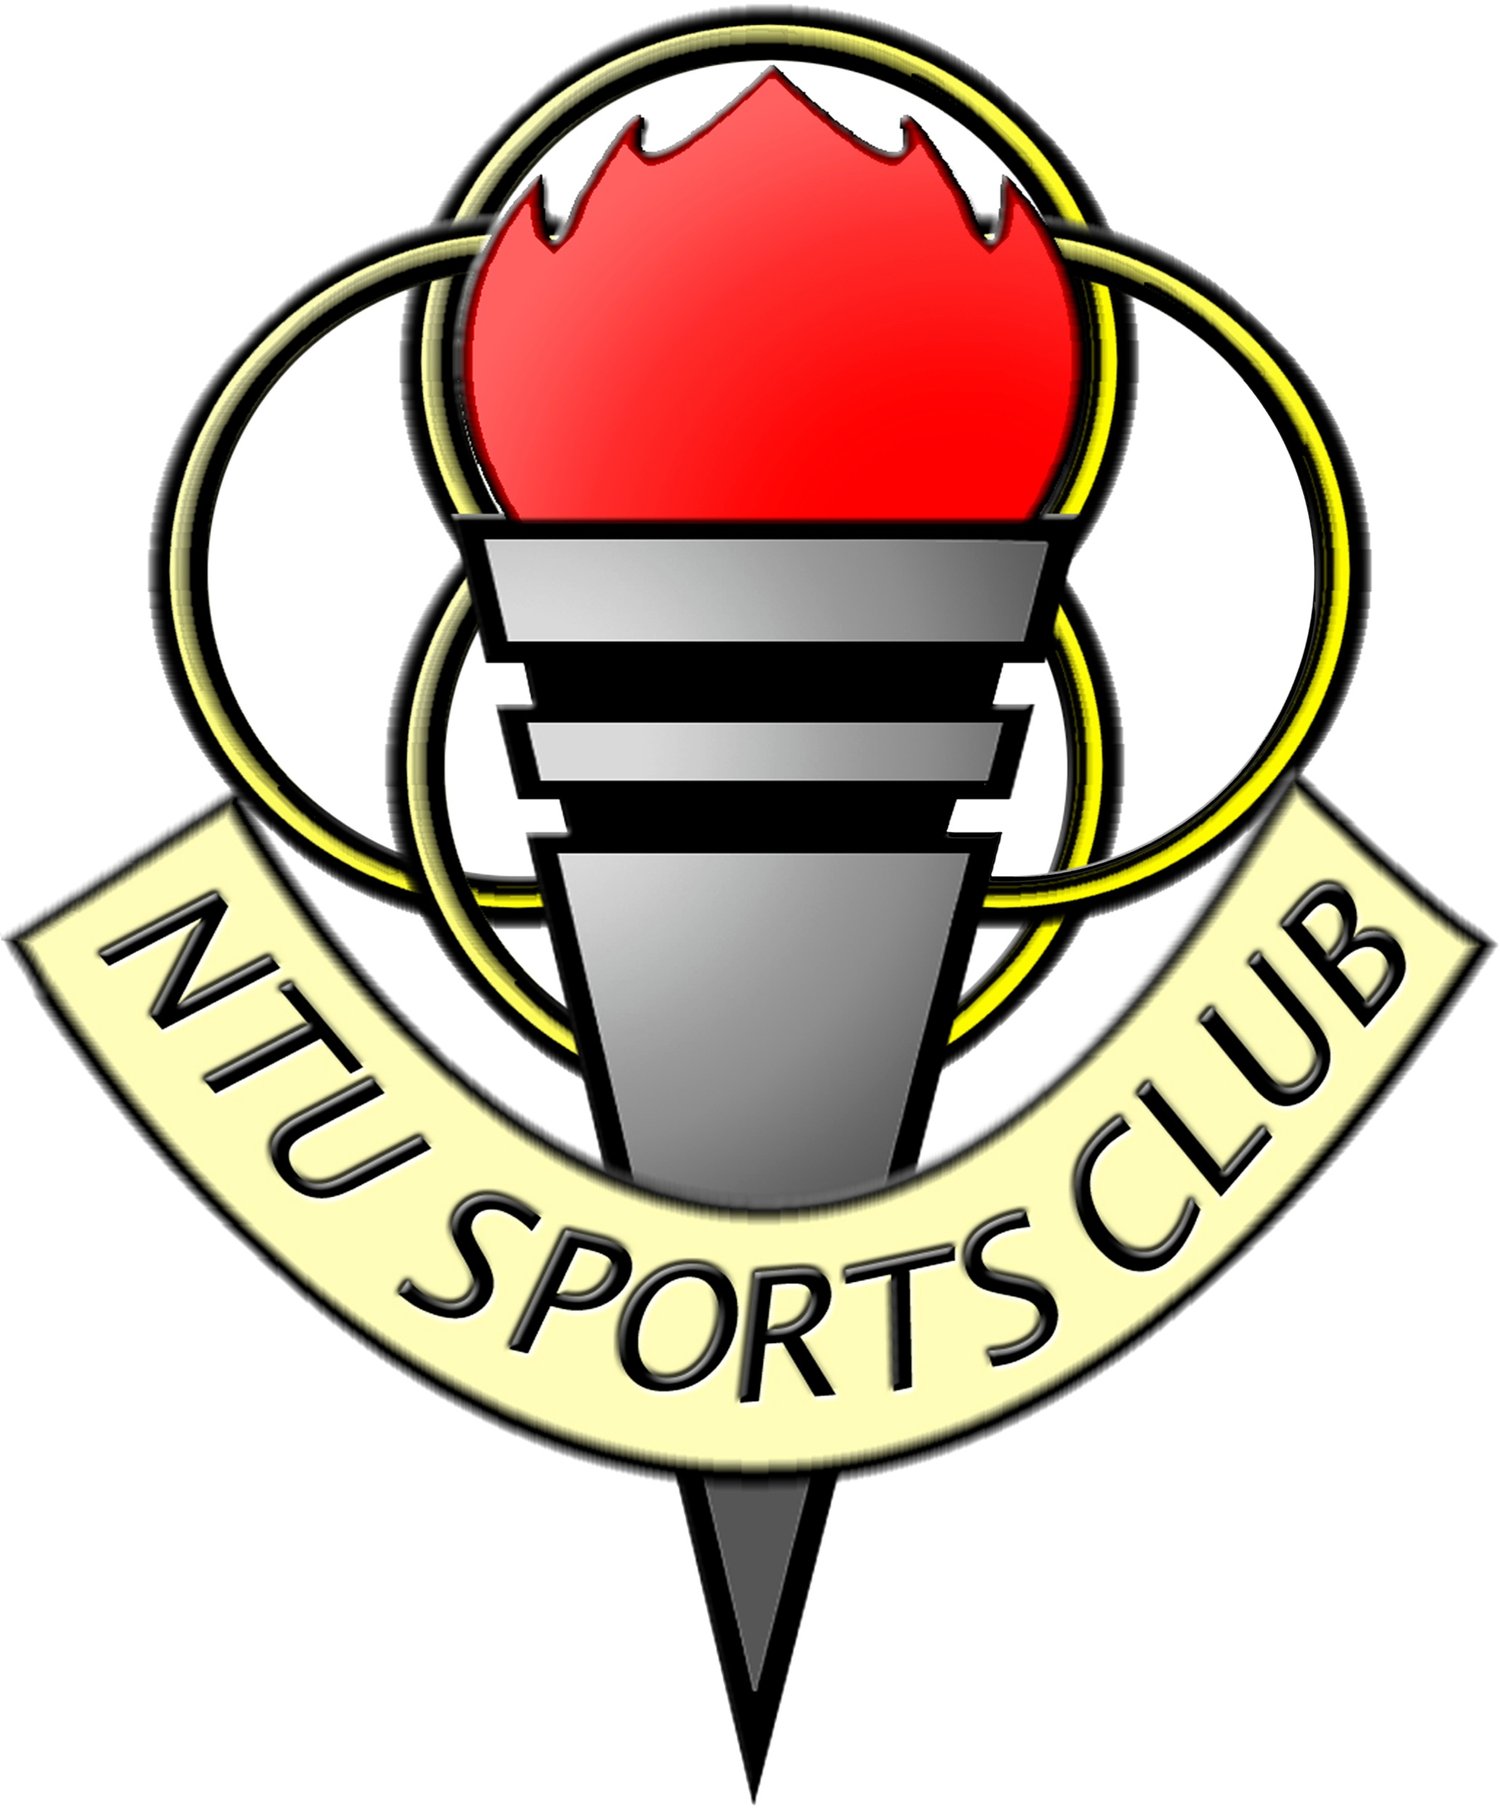 NTU Sports Club